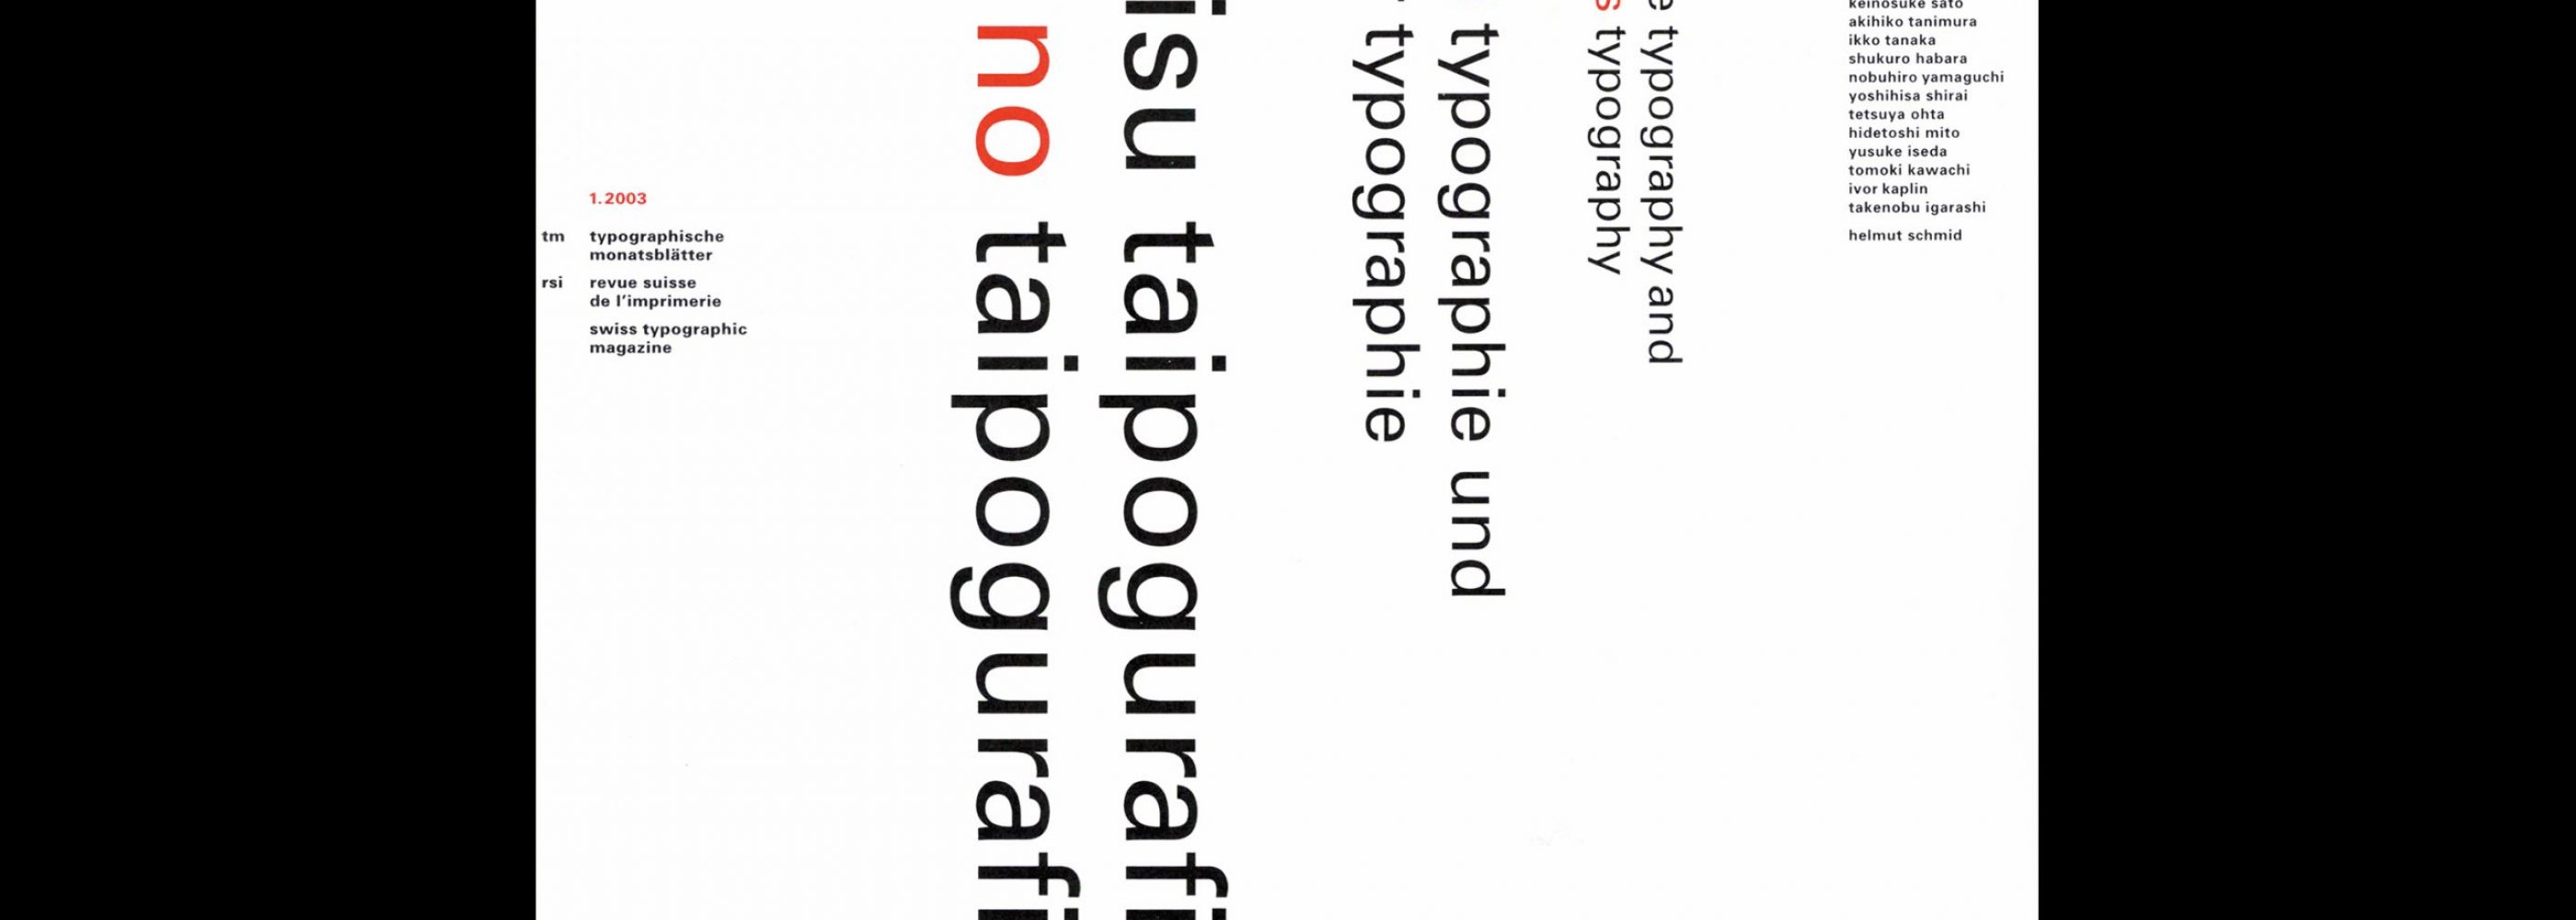 Typografische Monatsblätter, 1, 2003. Cover design by Helmut Schmid